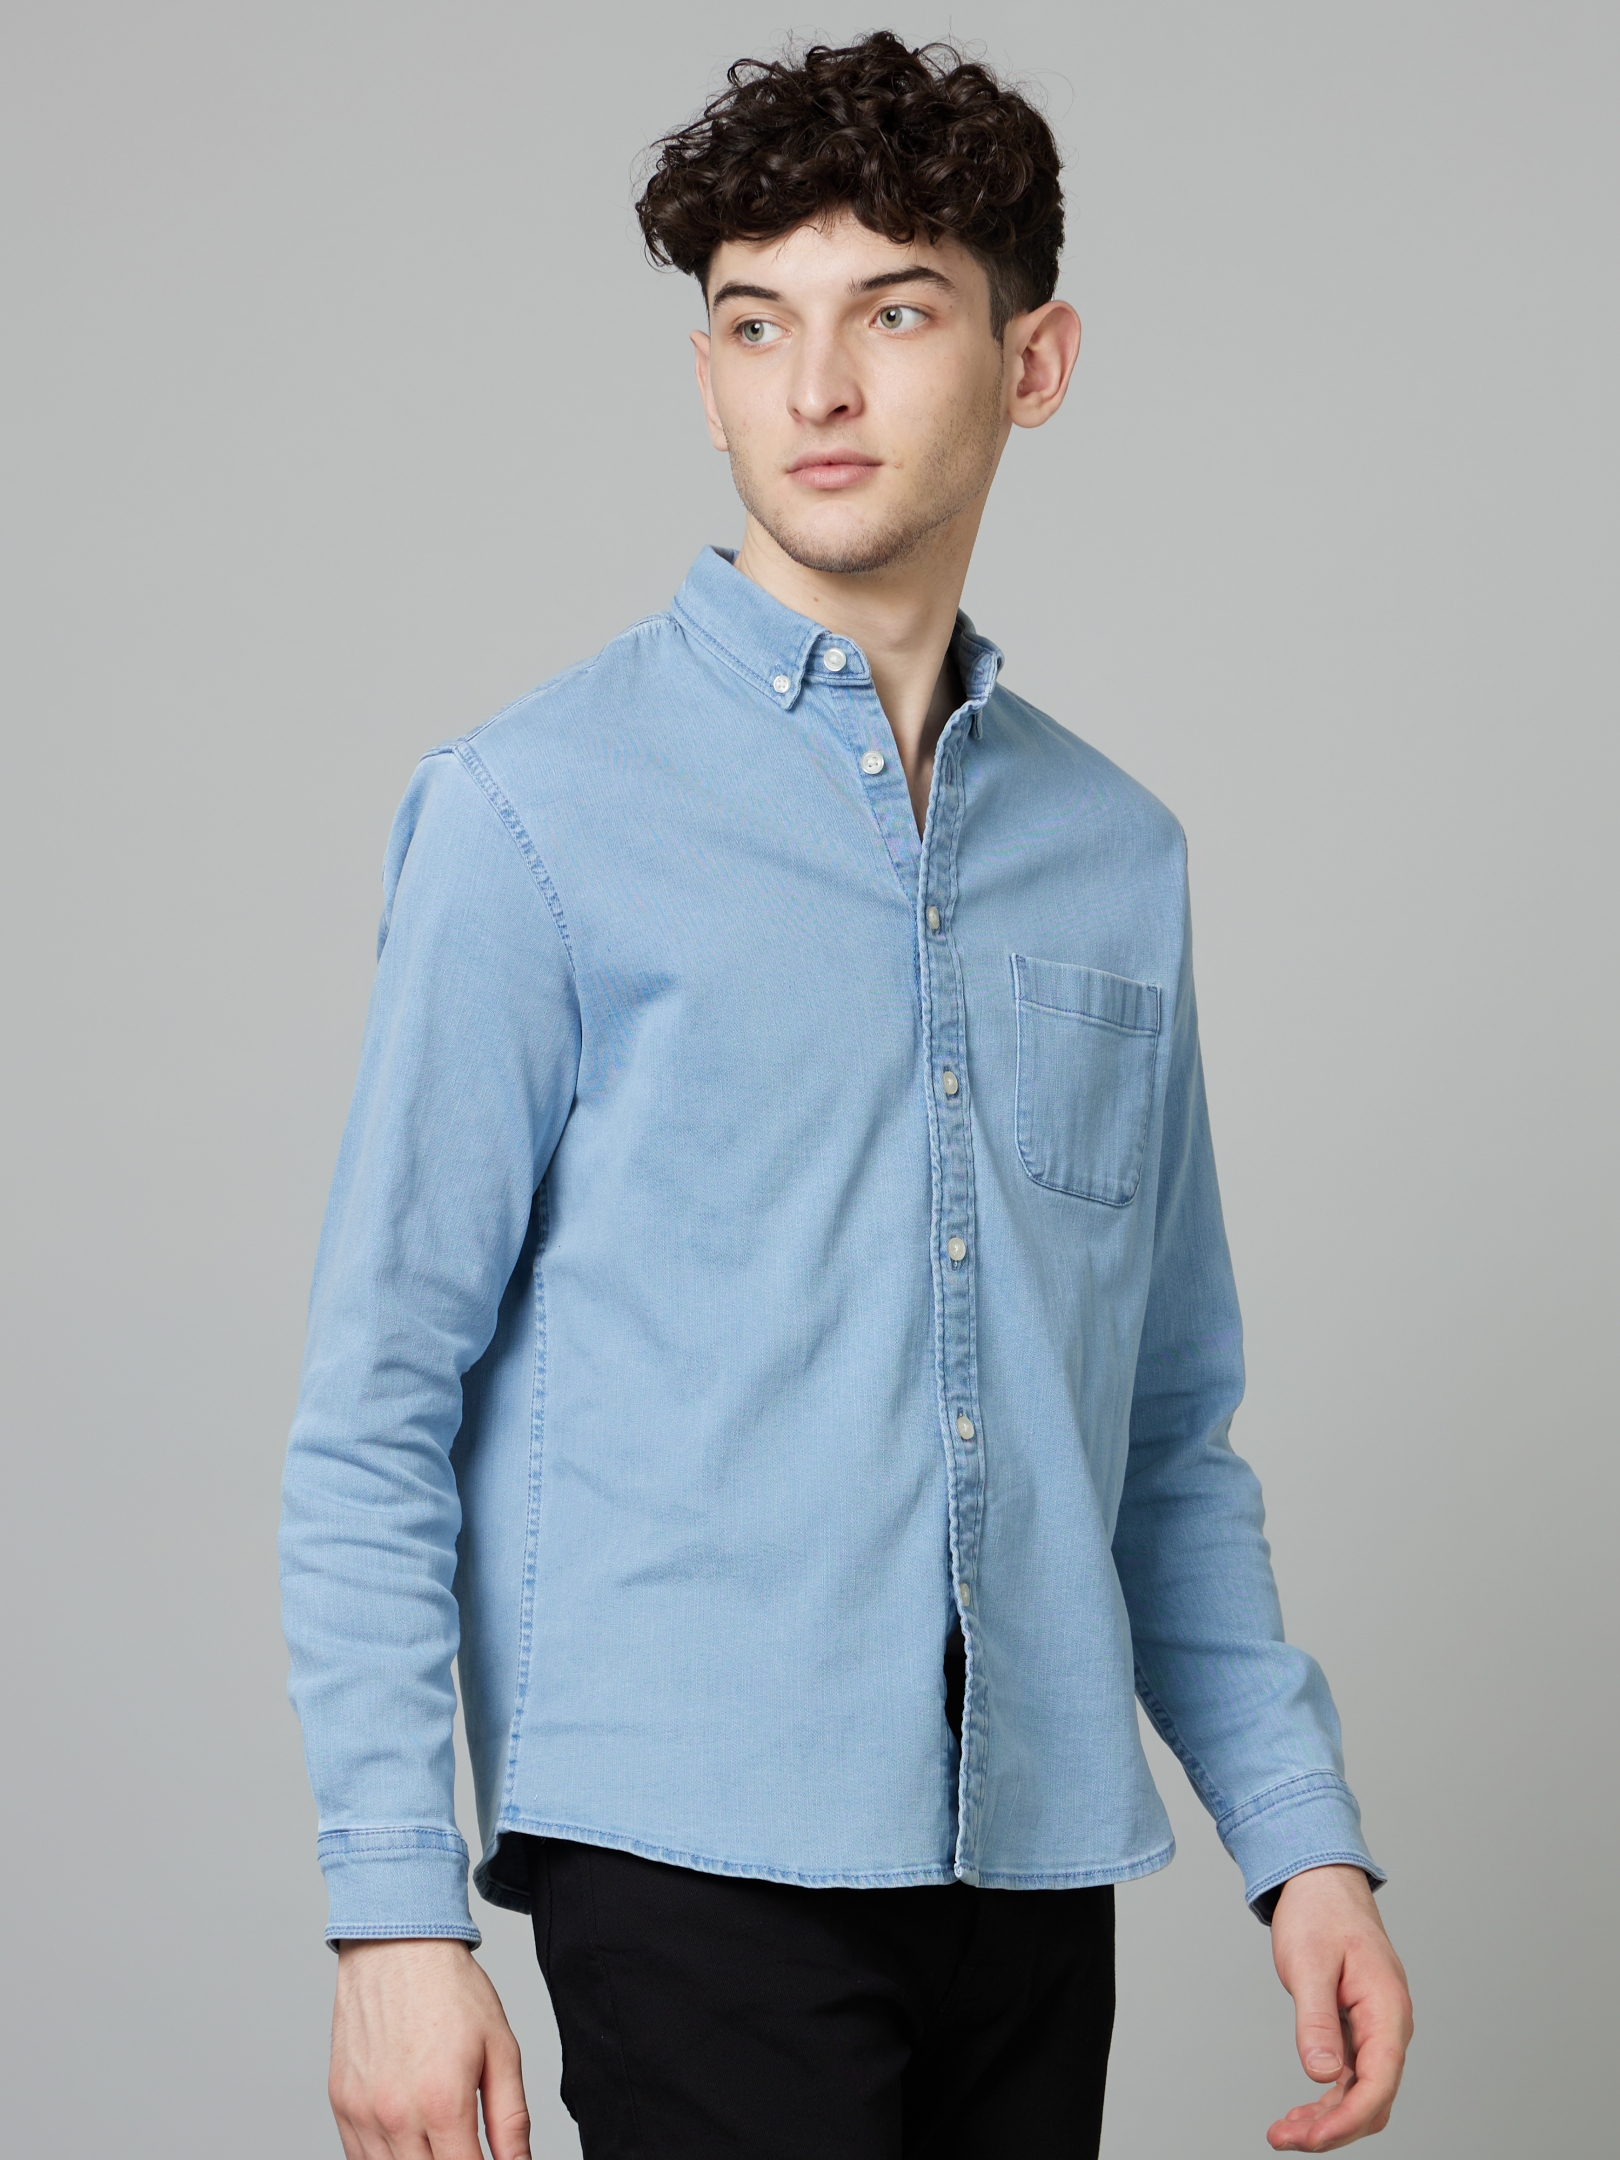 celio | Men's Blue Solid Casual Shirts 2